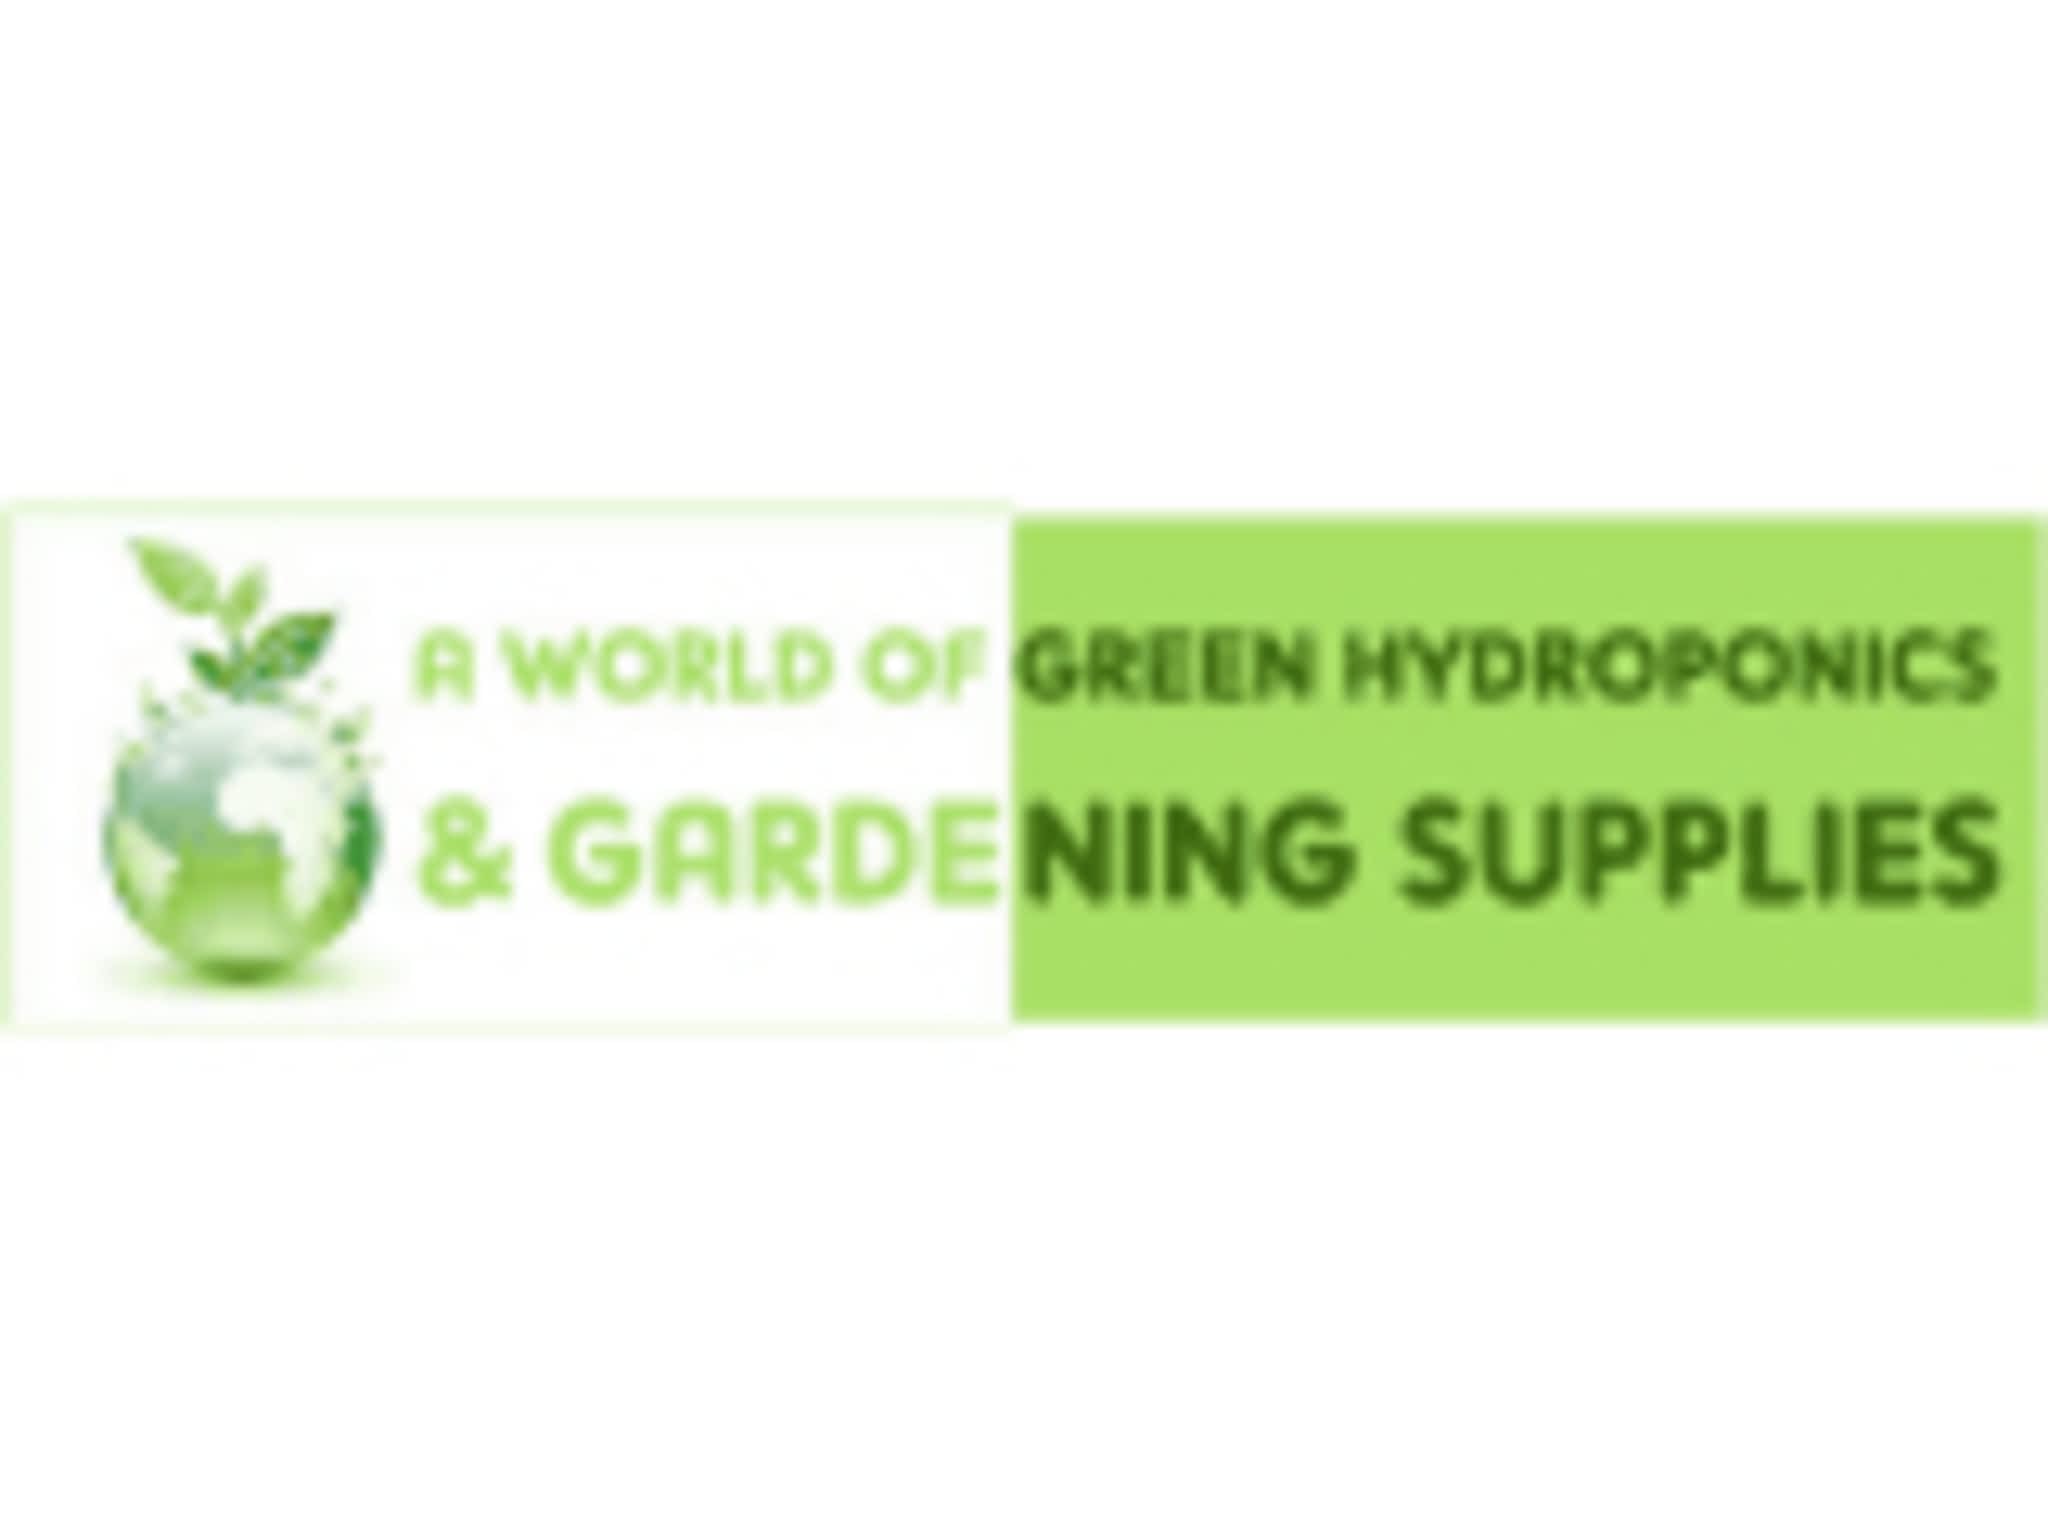 photo A World Of Green Hydroponics & Gardening Supplies